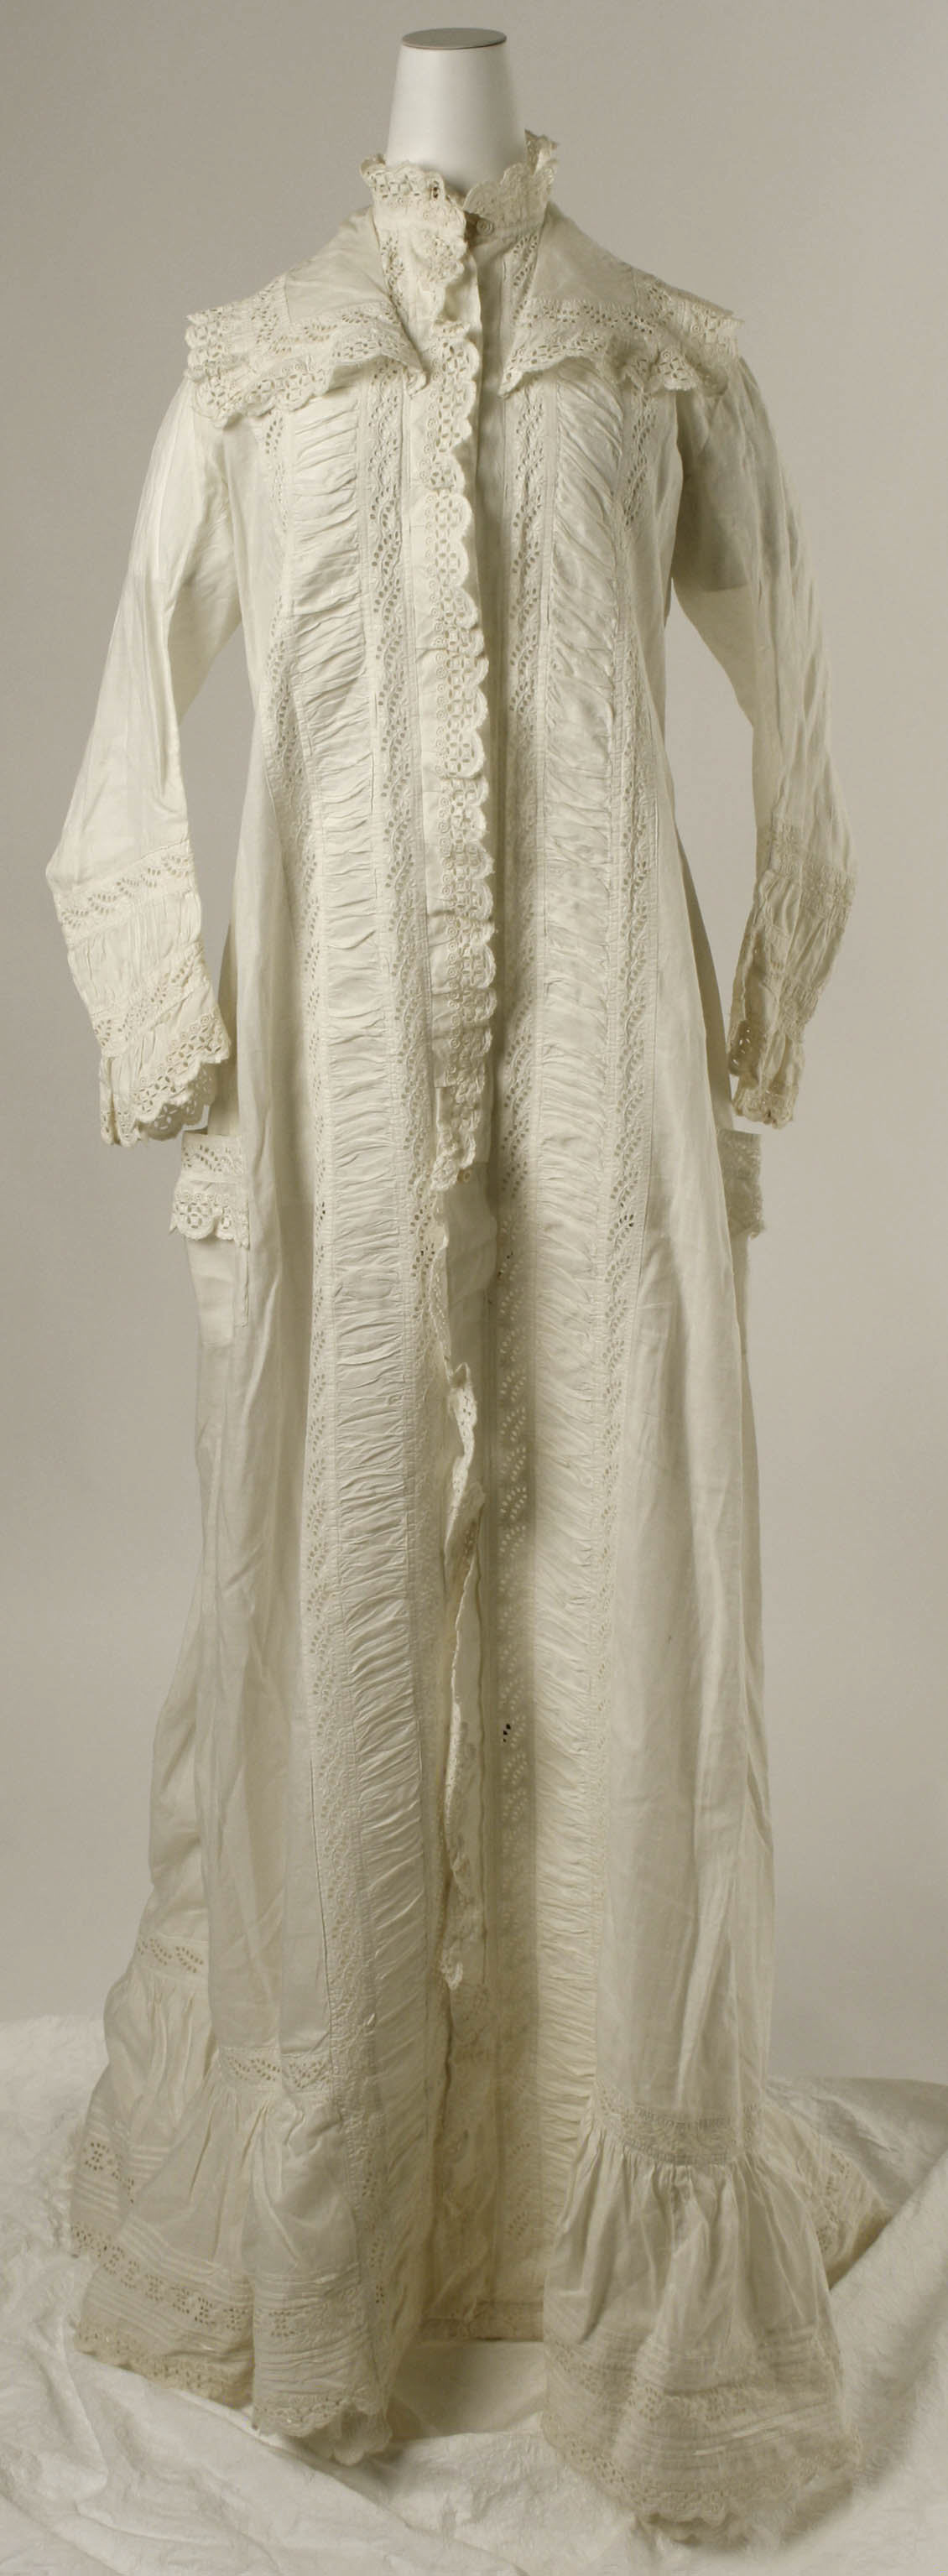 Tea gown | British | The Metropolitan Museum of Art